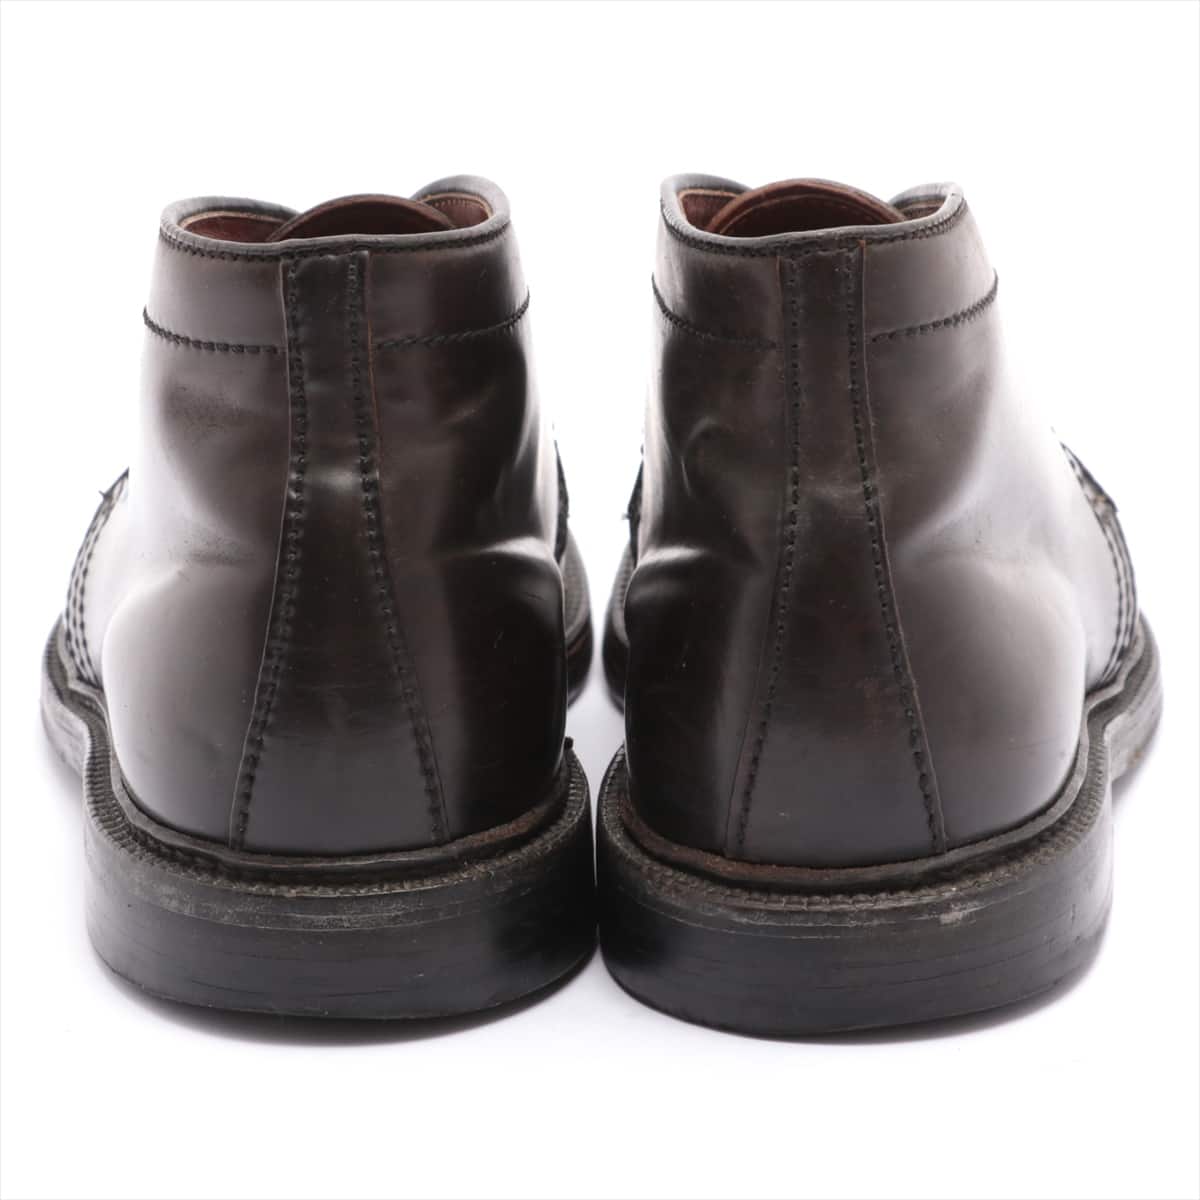 Alden Leather Chukka Boots 9 Men's Brown